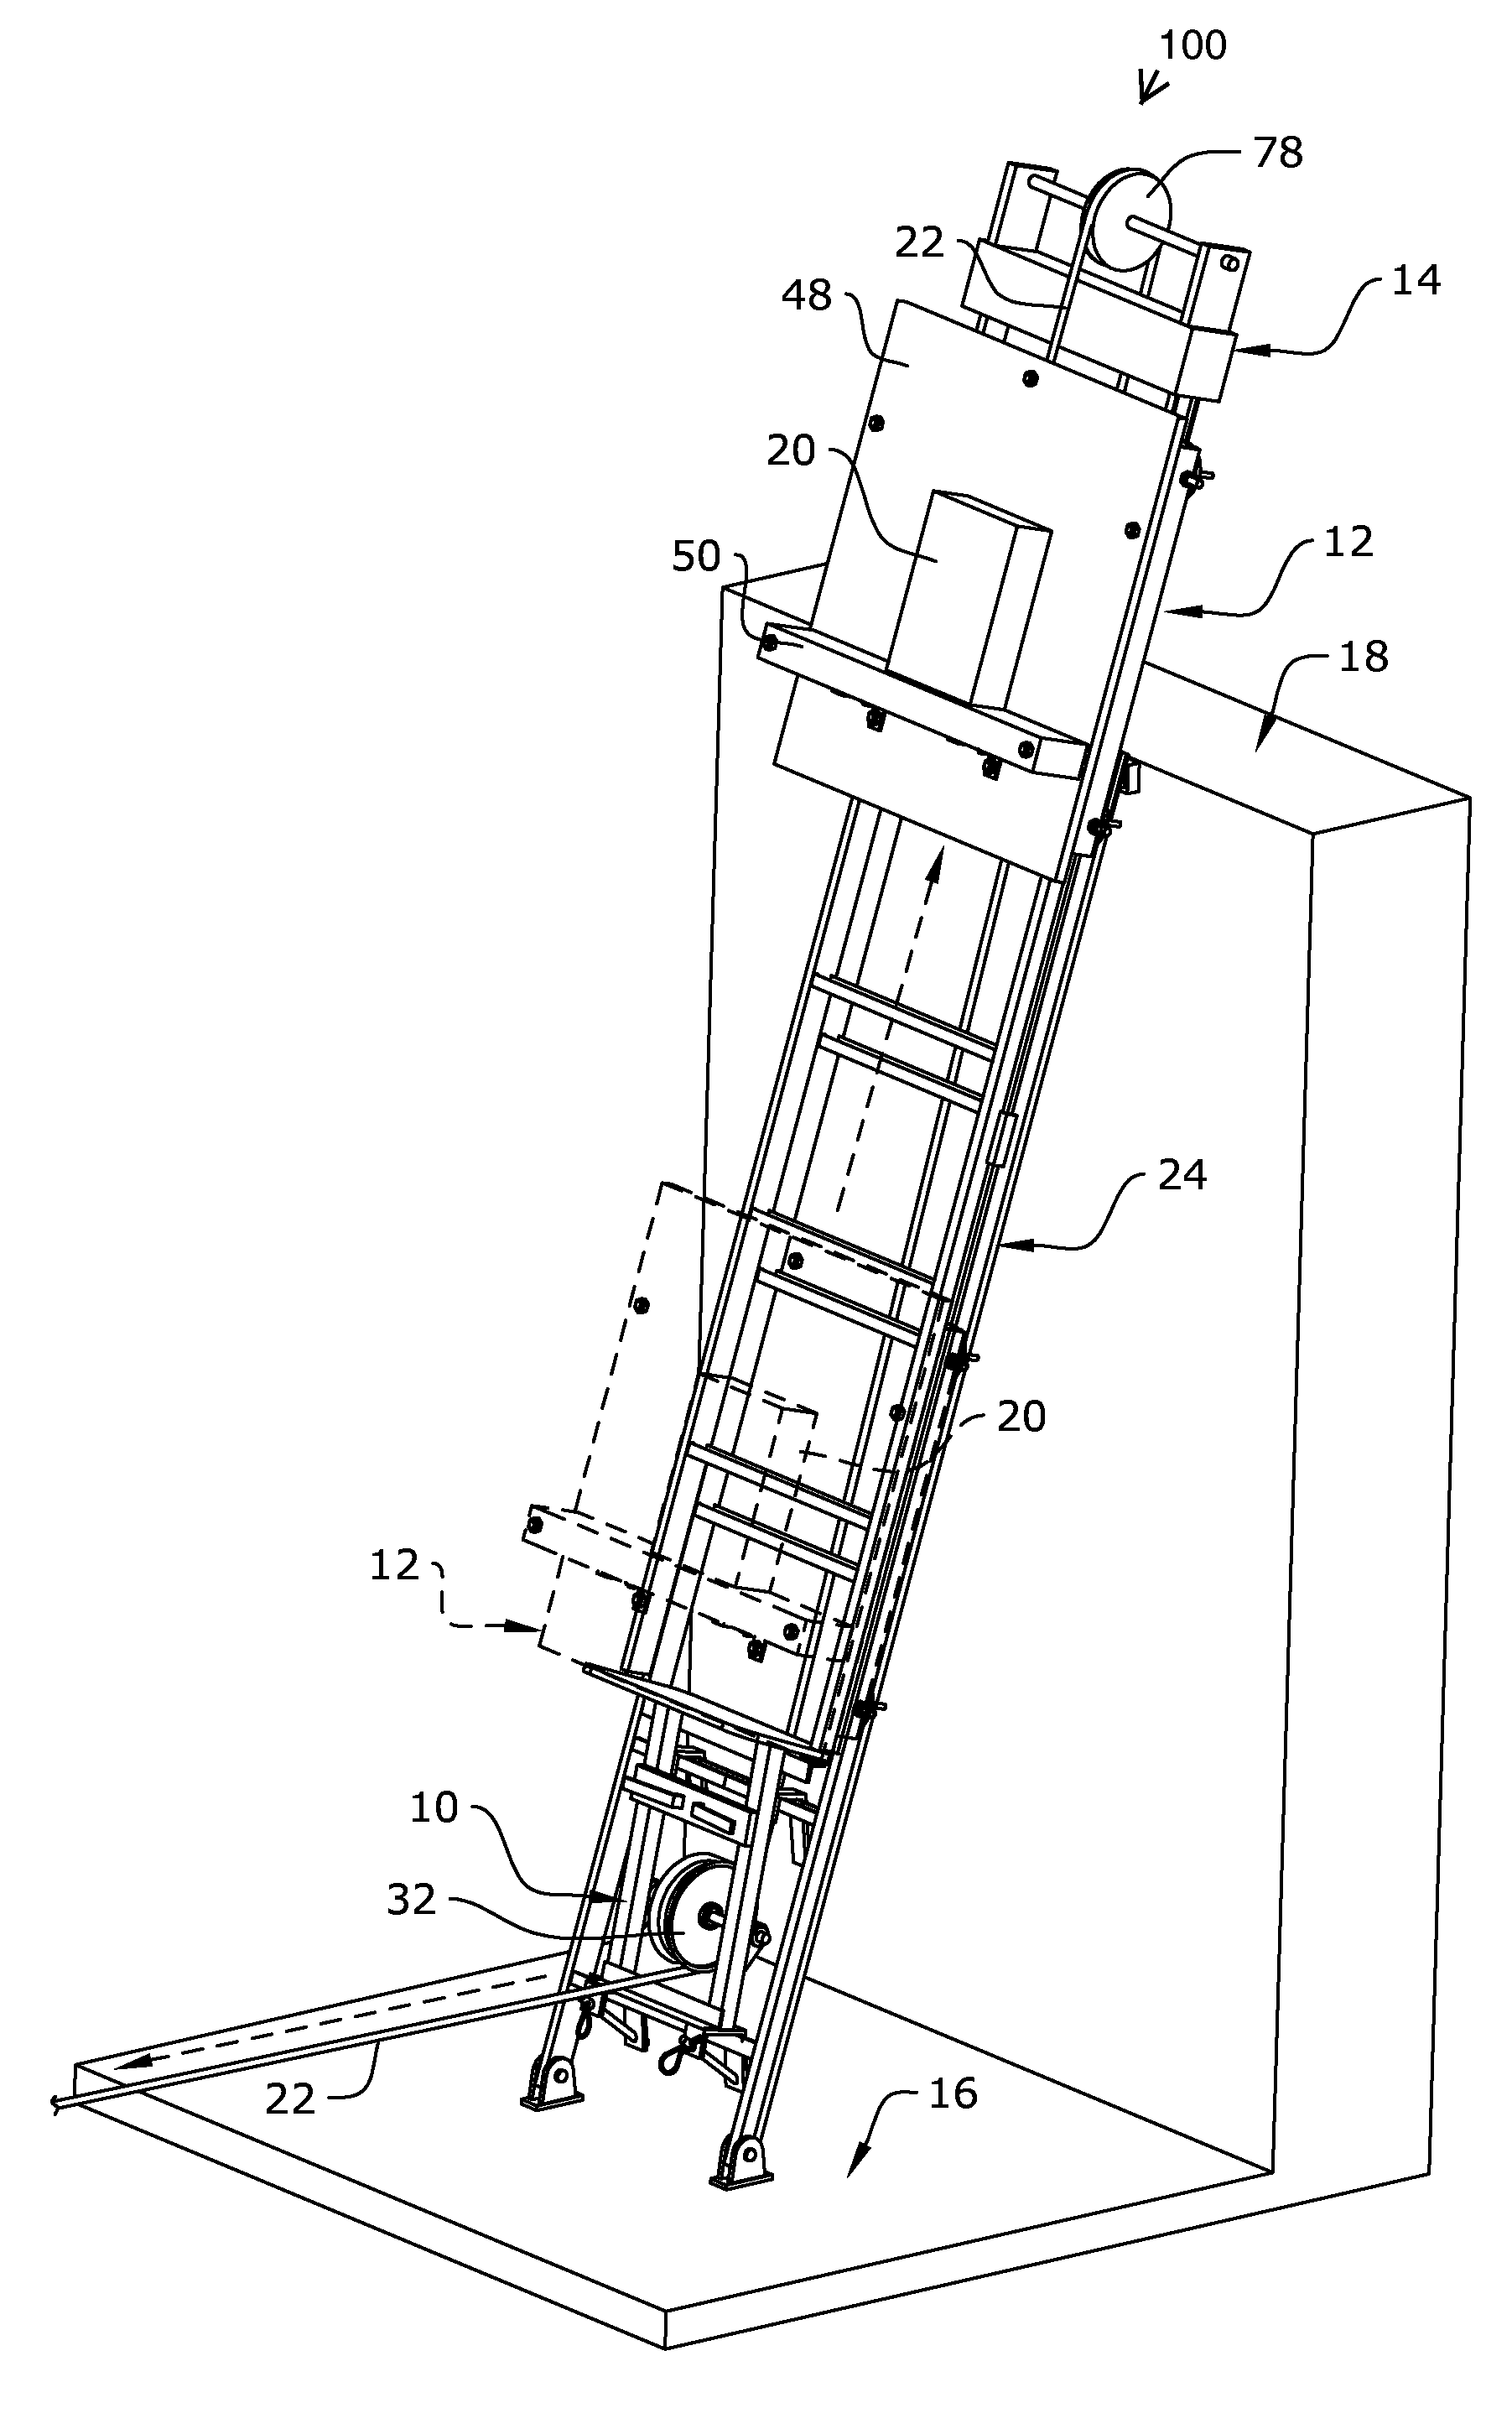 Ladder lift system